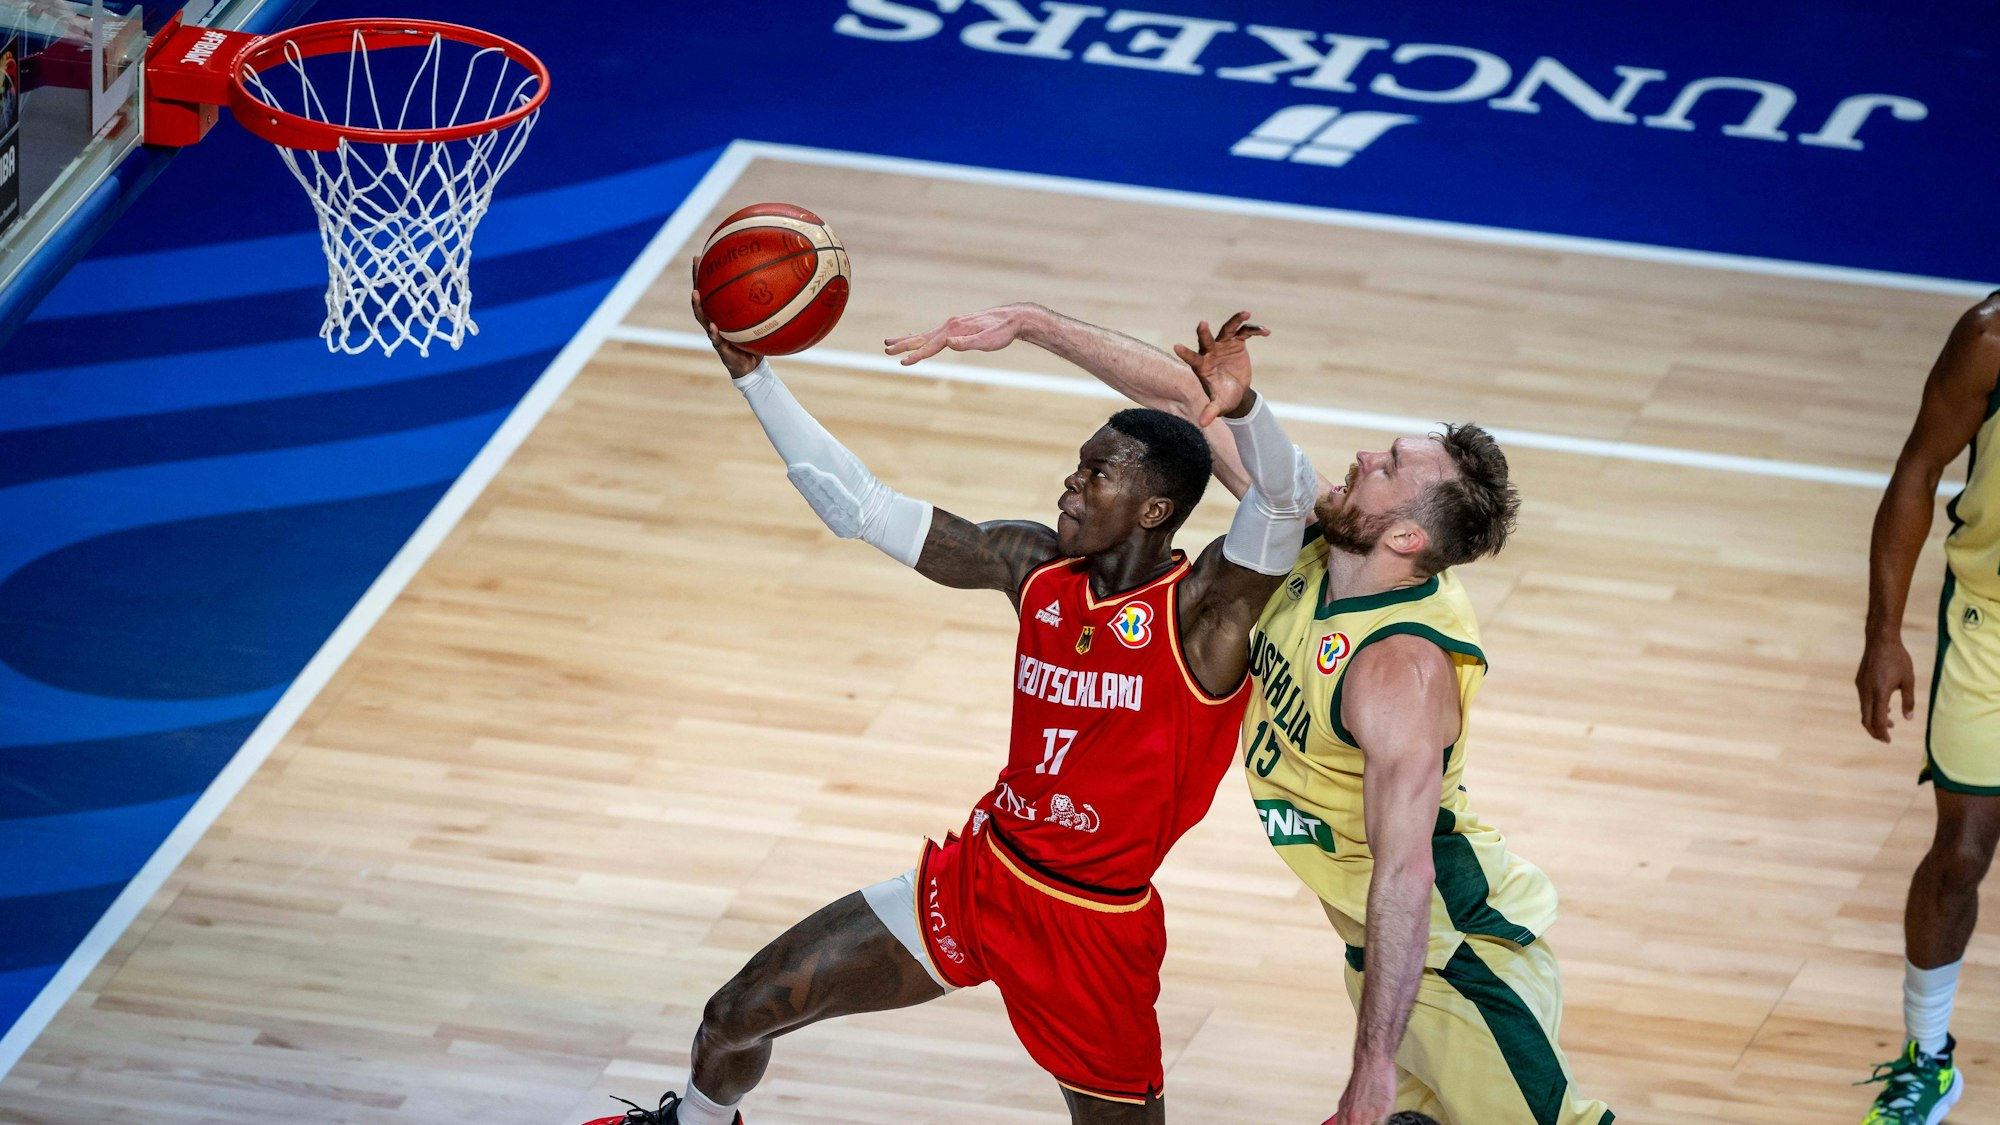 Basketball-Star Dennis Schröder beim Korbleger gegen Australien.